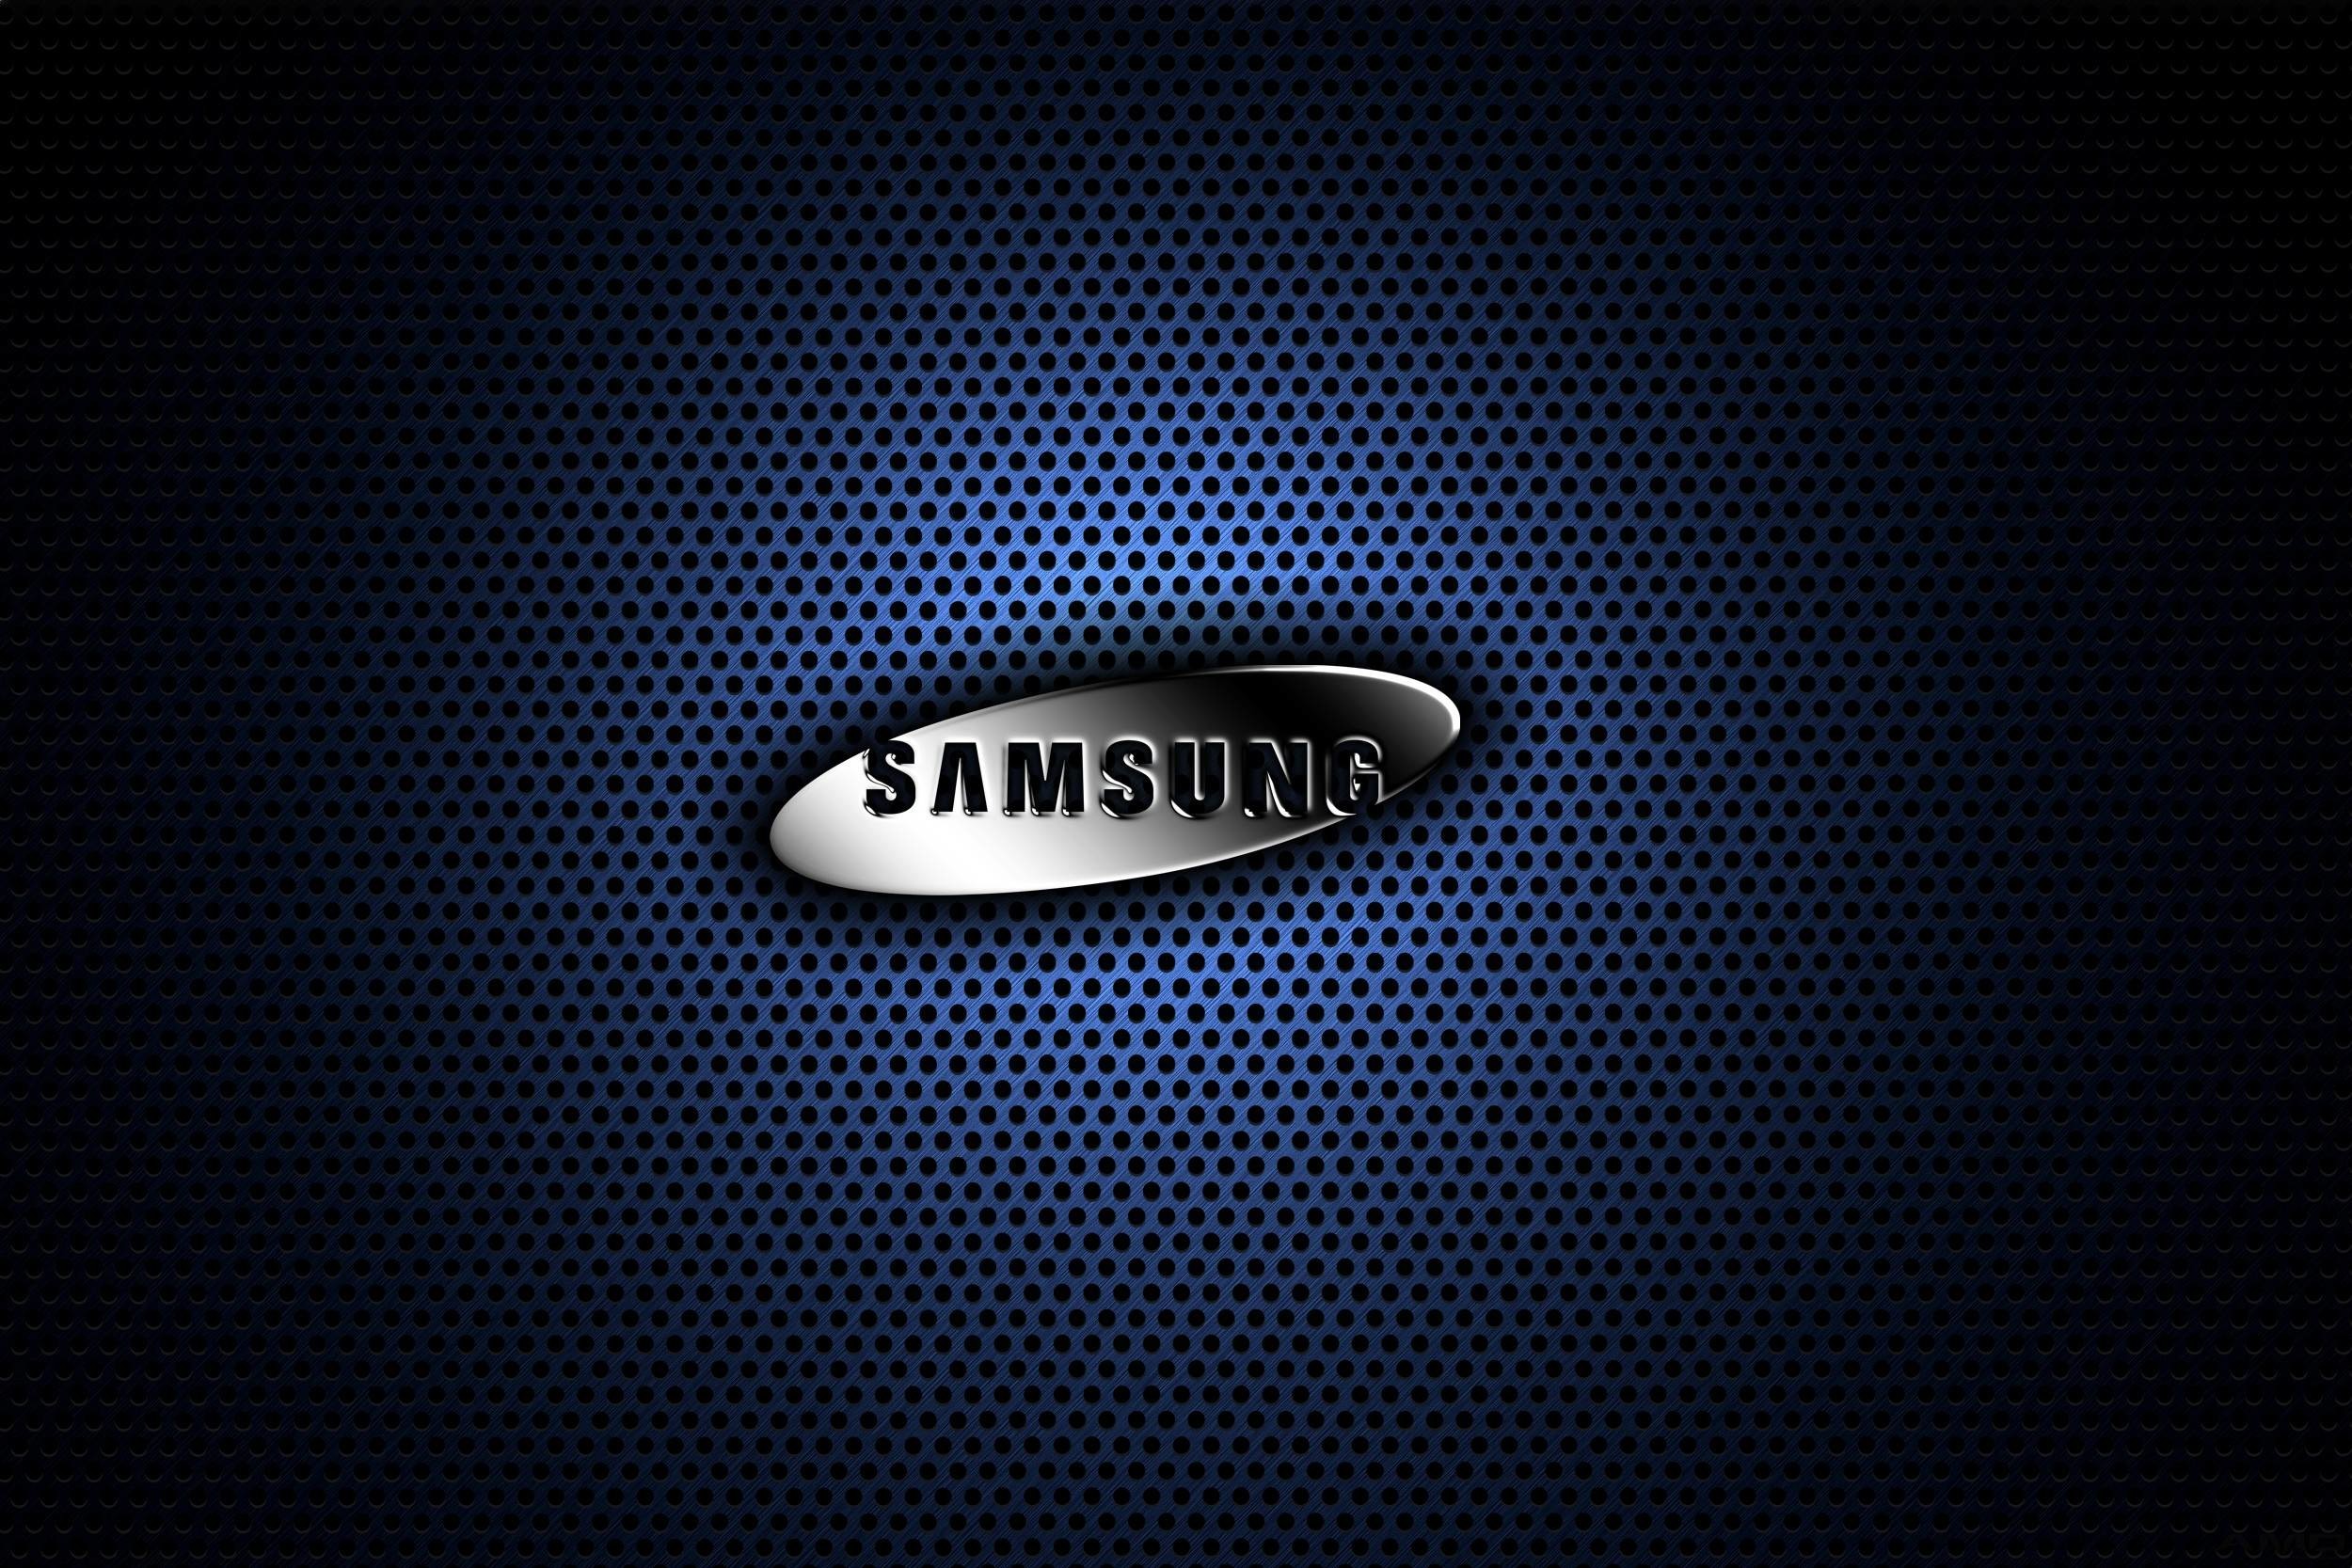 Samsung Logo Wallpaper images